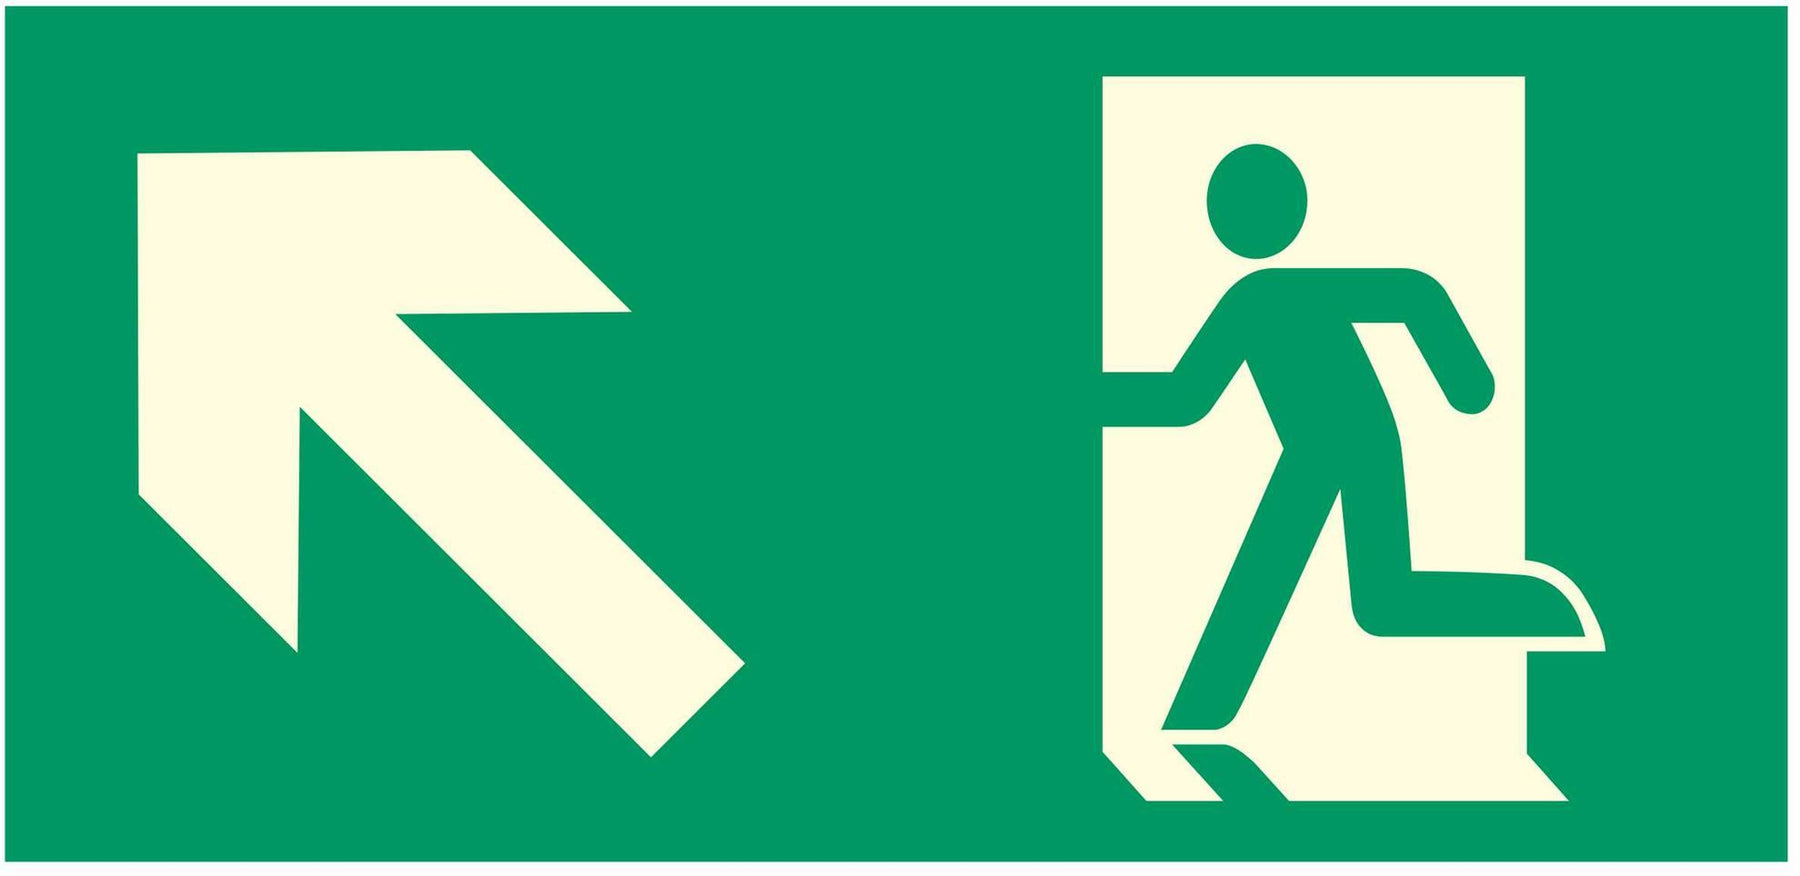 Emergency Exit  - Running Man Left - Up Left Arrow